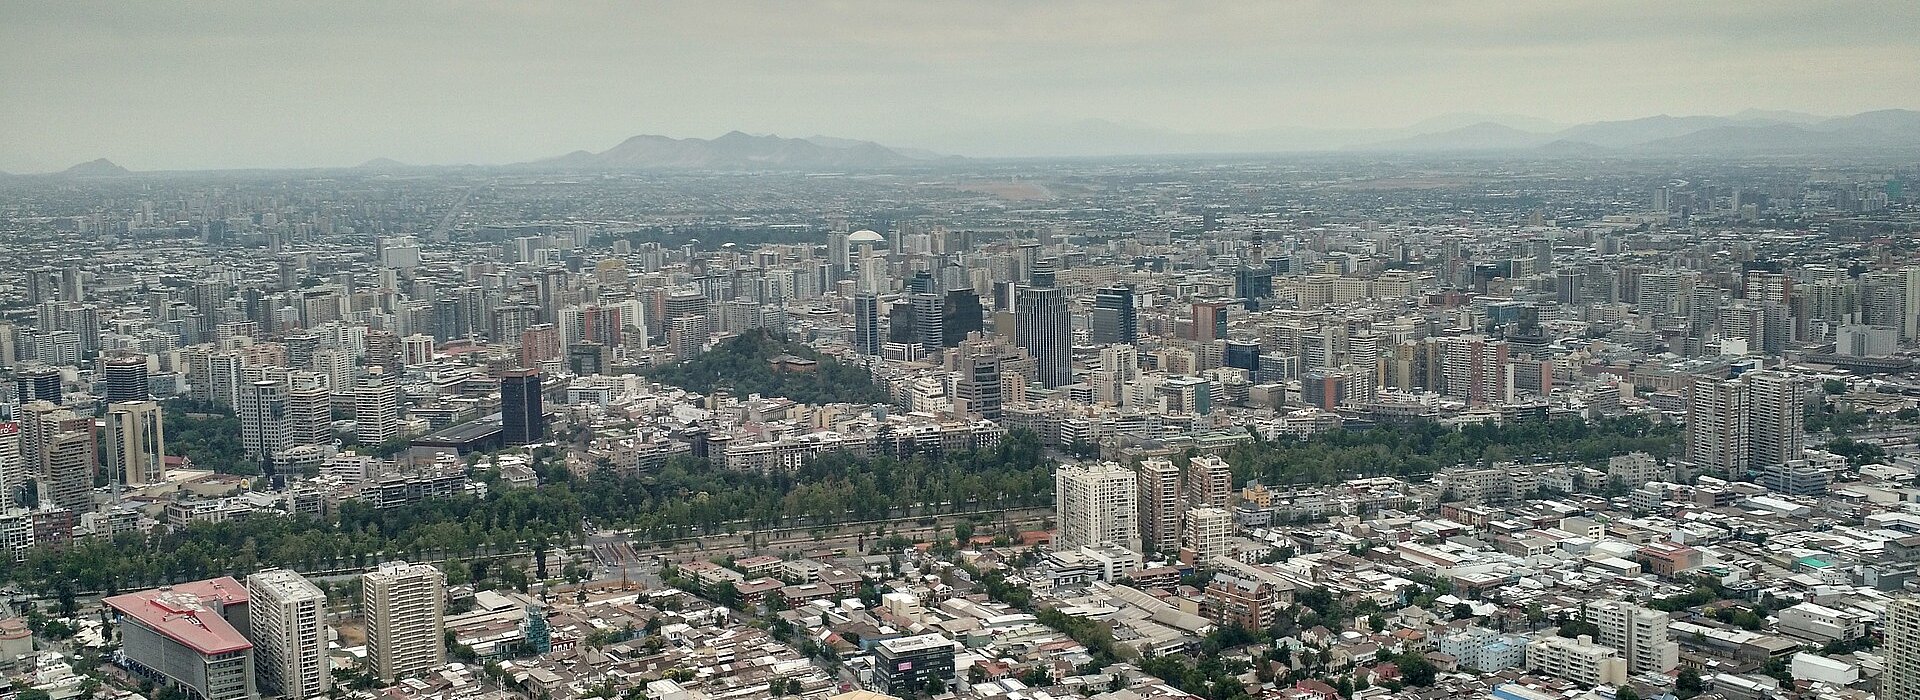 vista do alto da cidade de santiago do Chile